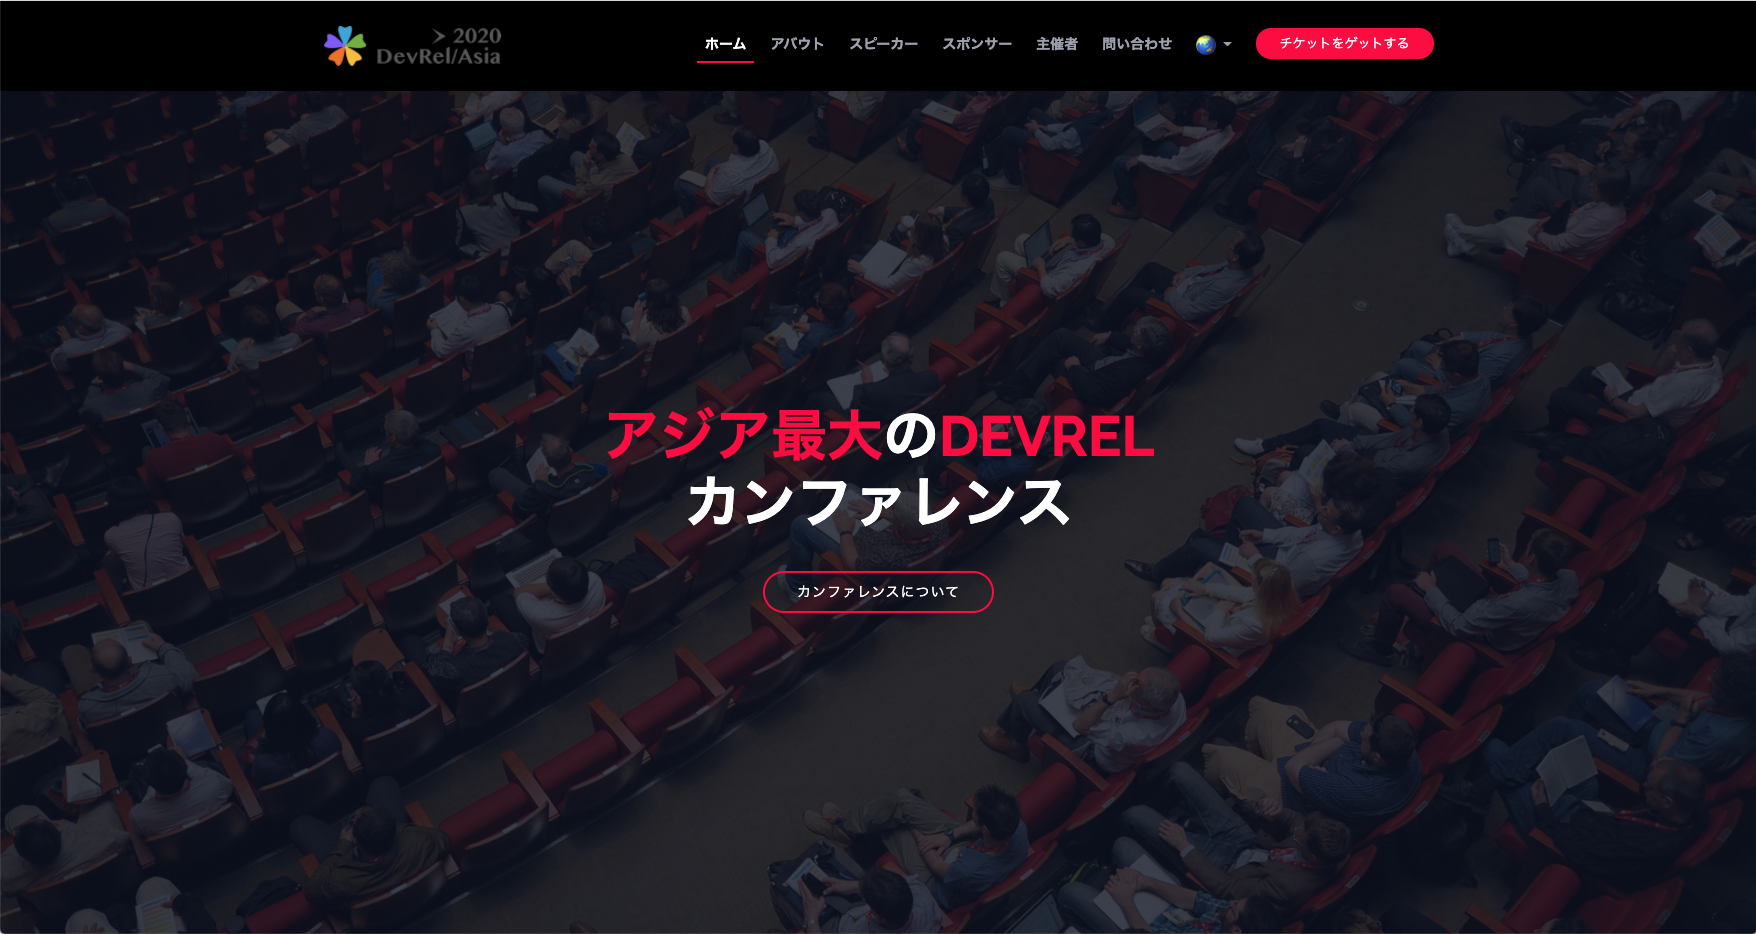 DevRel/Asia 2020を開催しました